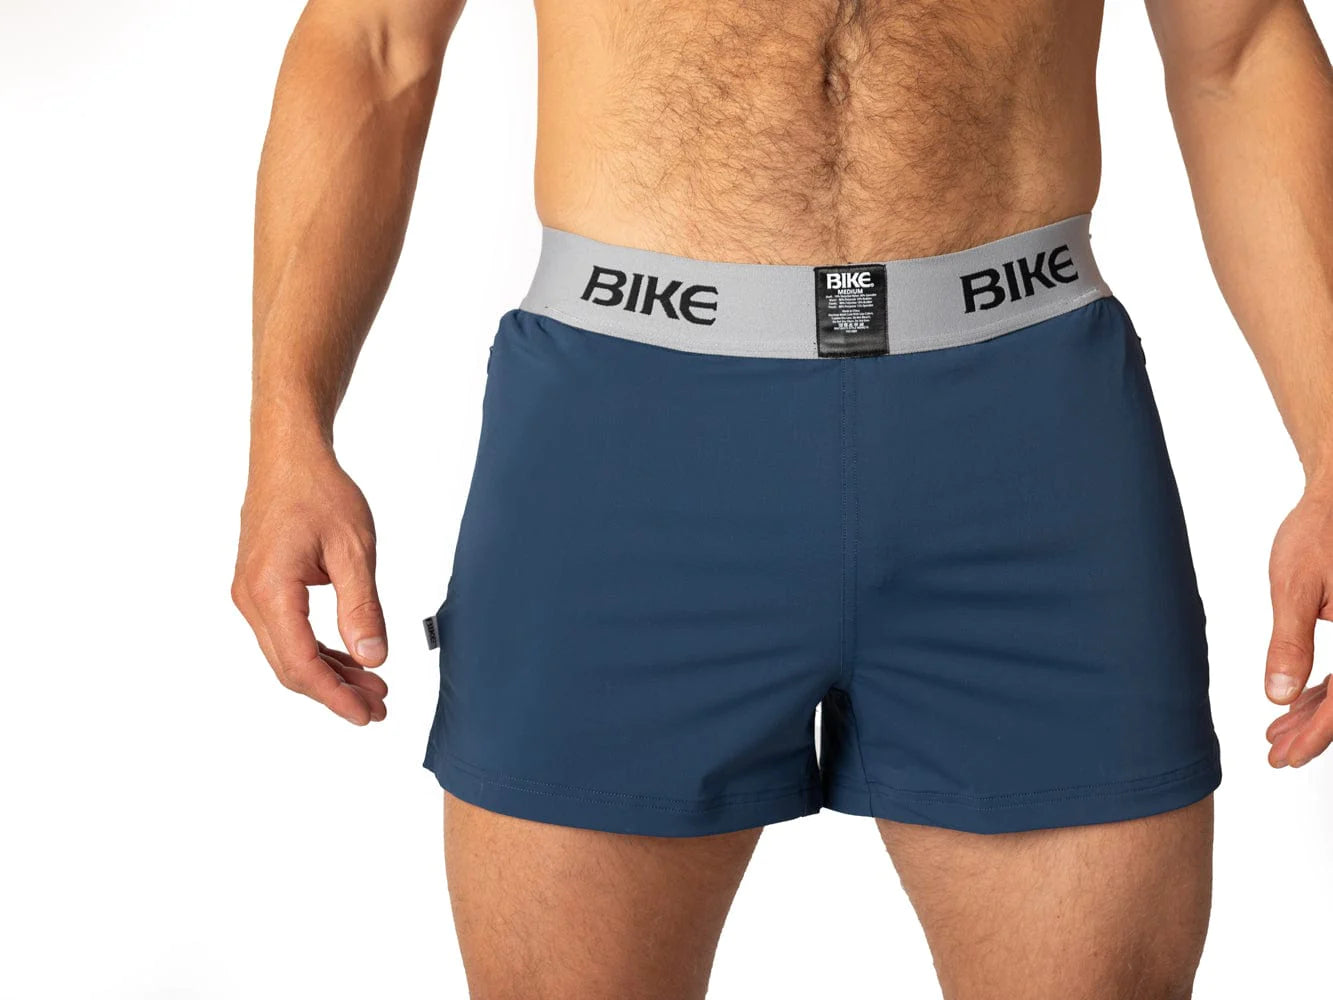 Bike Jock Shorts